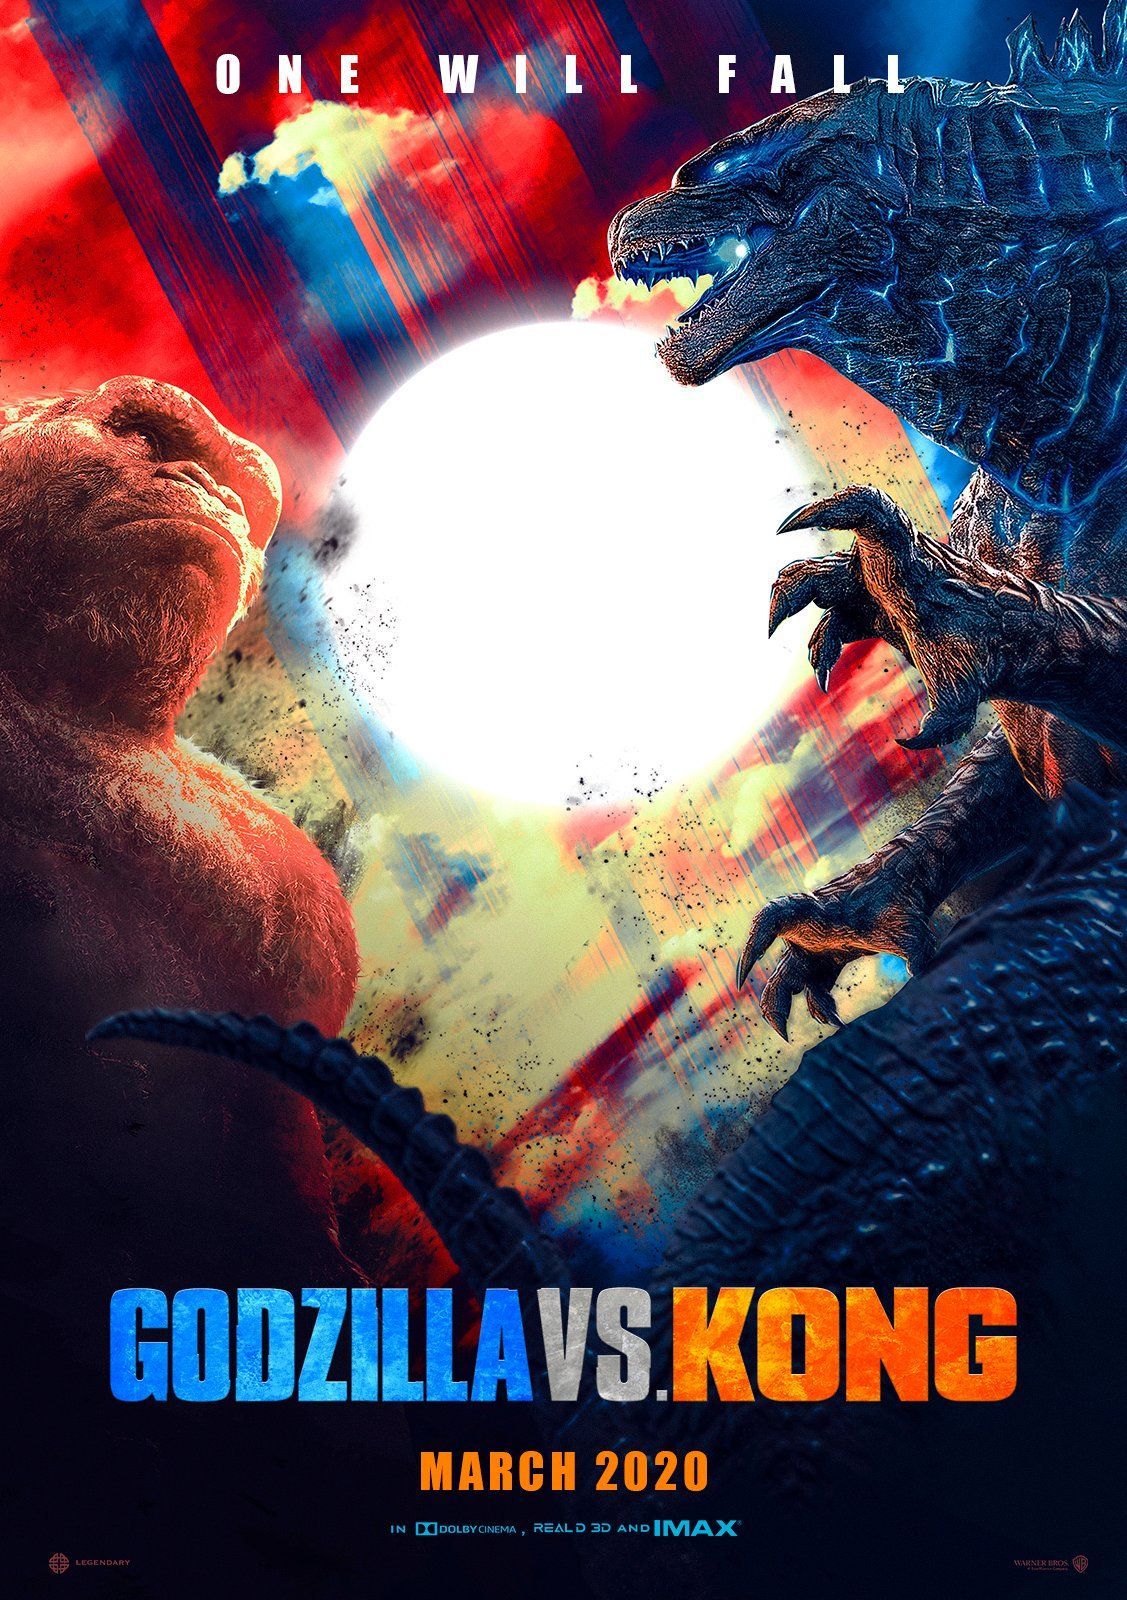 Twitter. King kong vs godzilla, Godzilla wallpaper, Godzilla vs